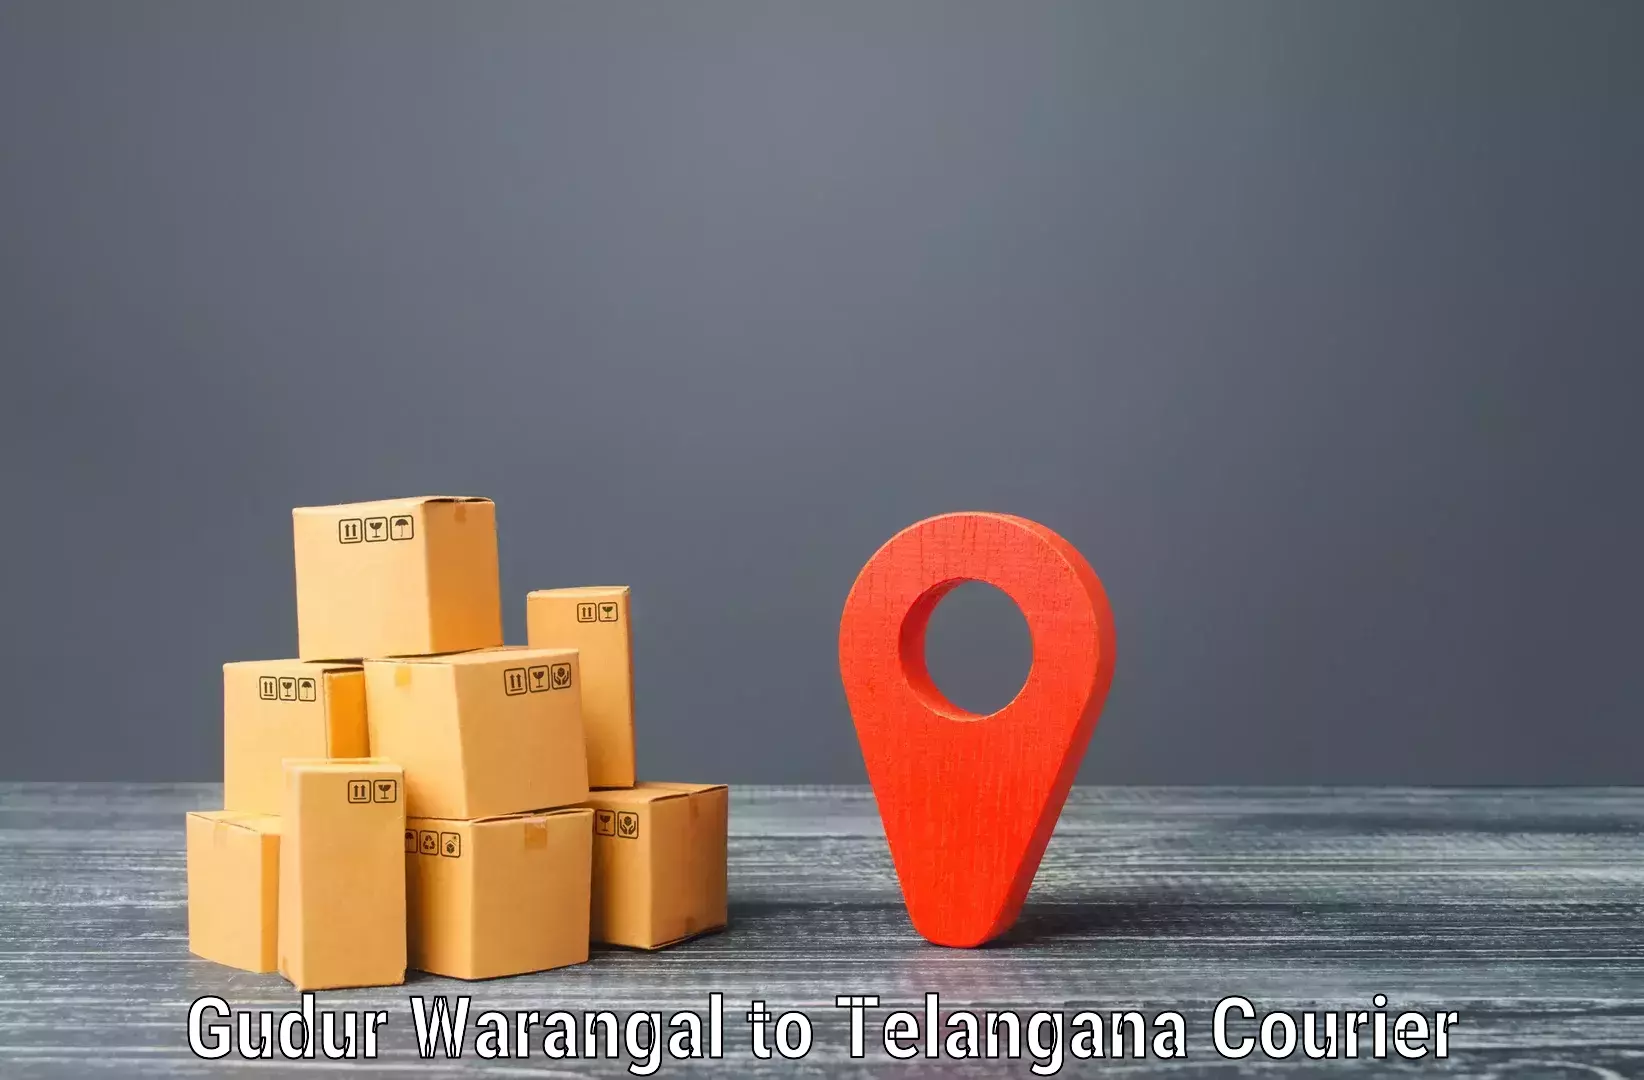 State-of-the-art courier technology Gudur Warangal to Sadashivpet